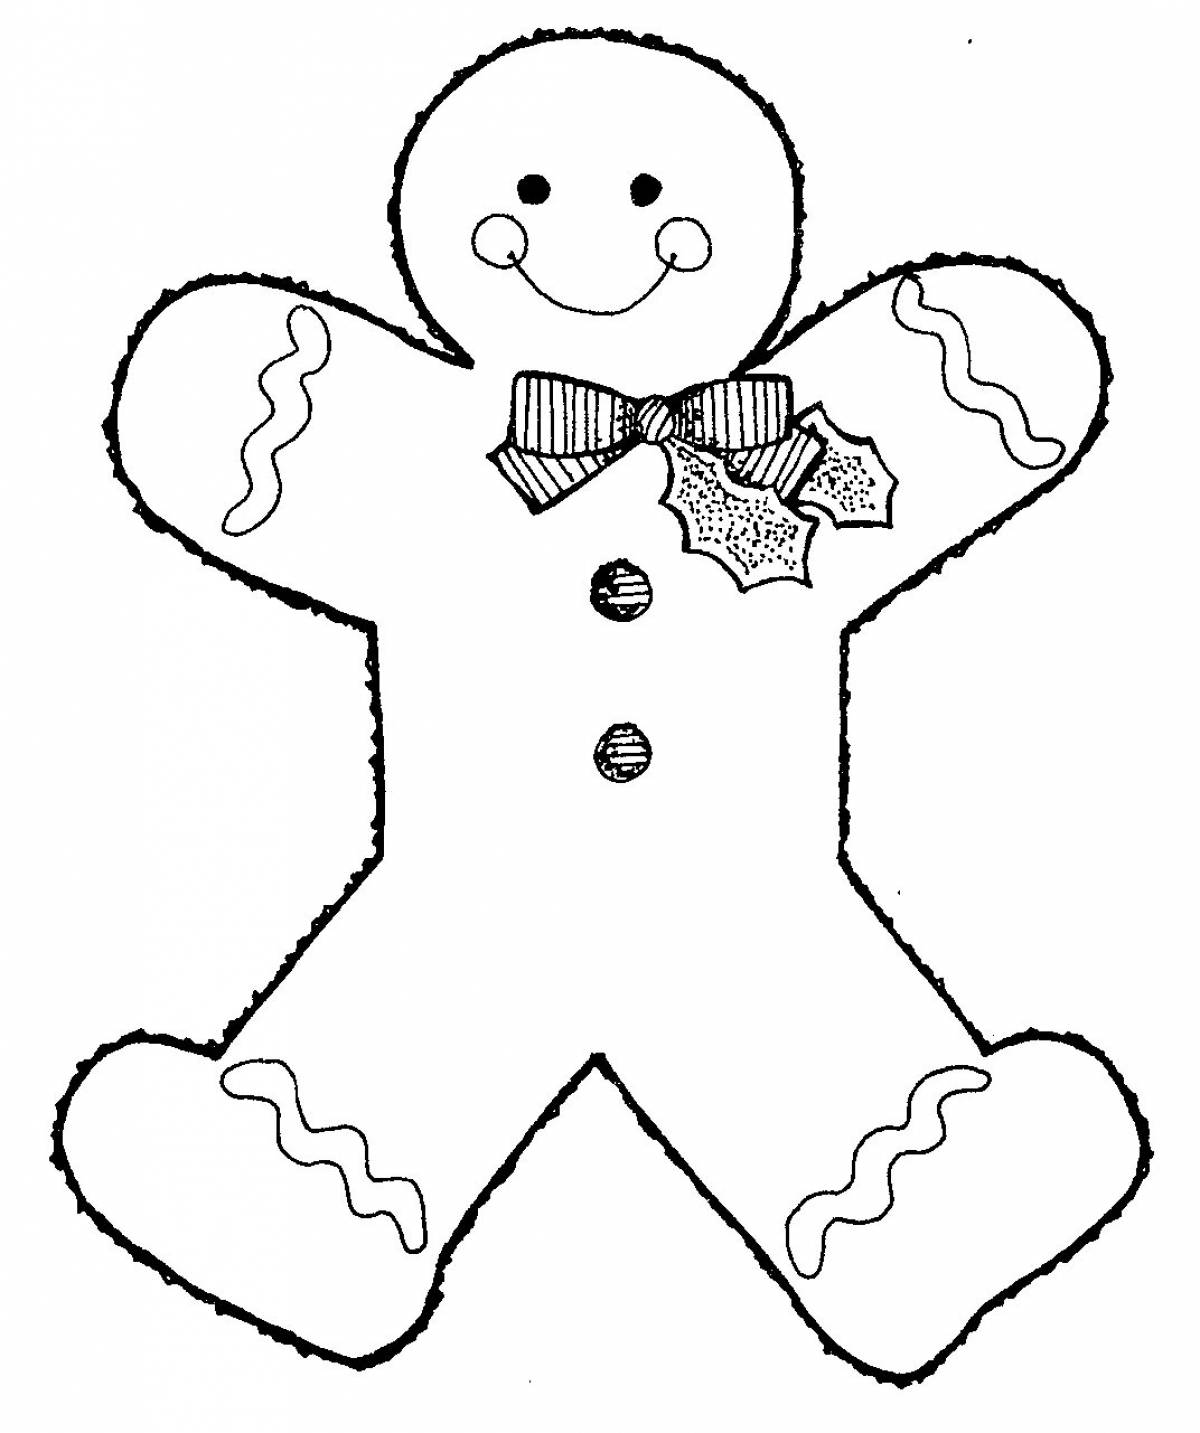 Coloring page wonderful gingerbread man